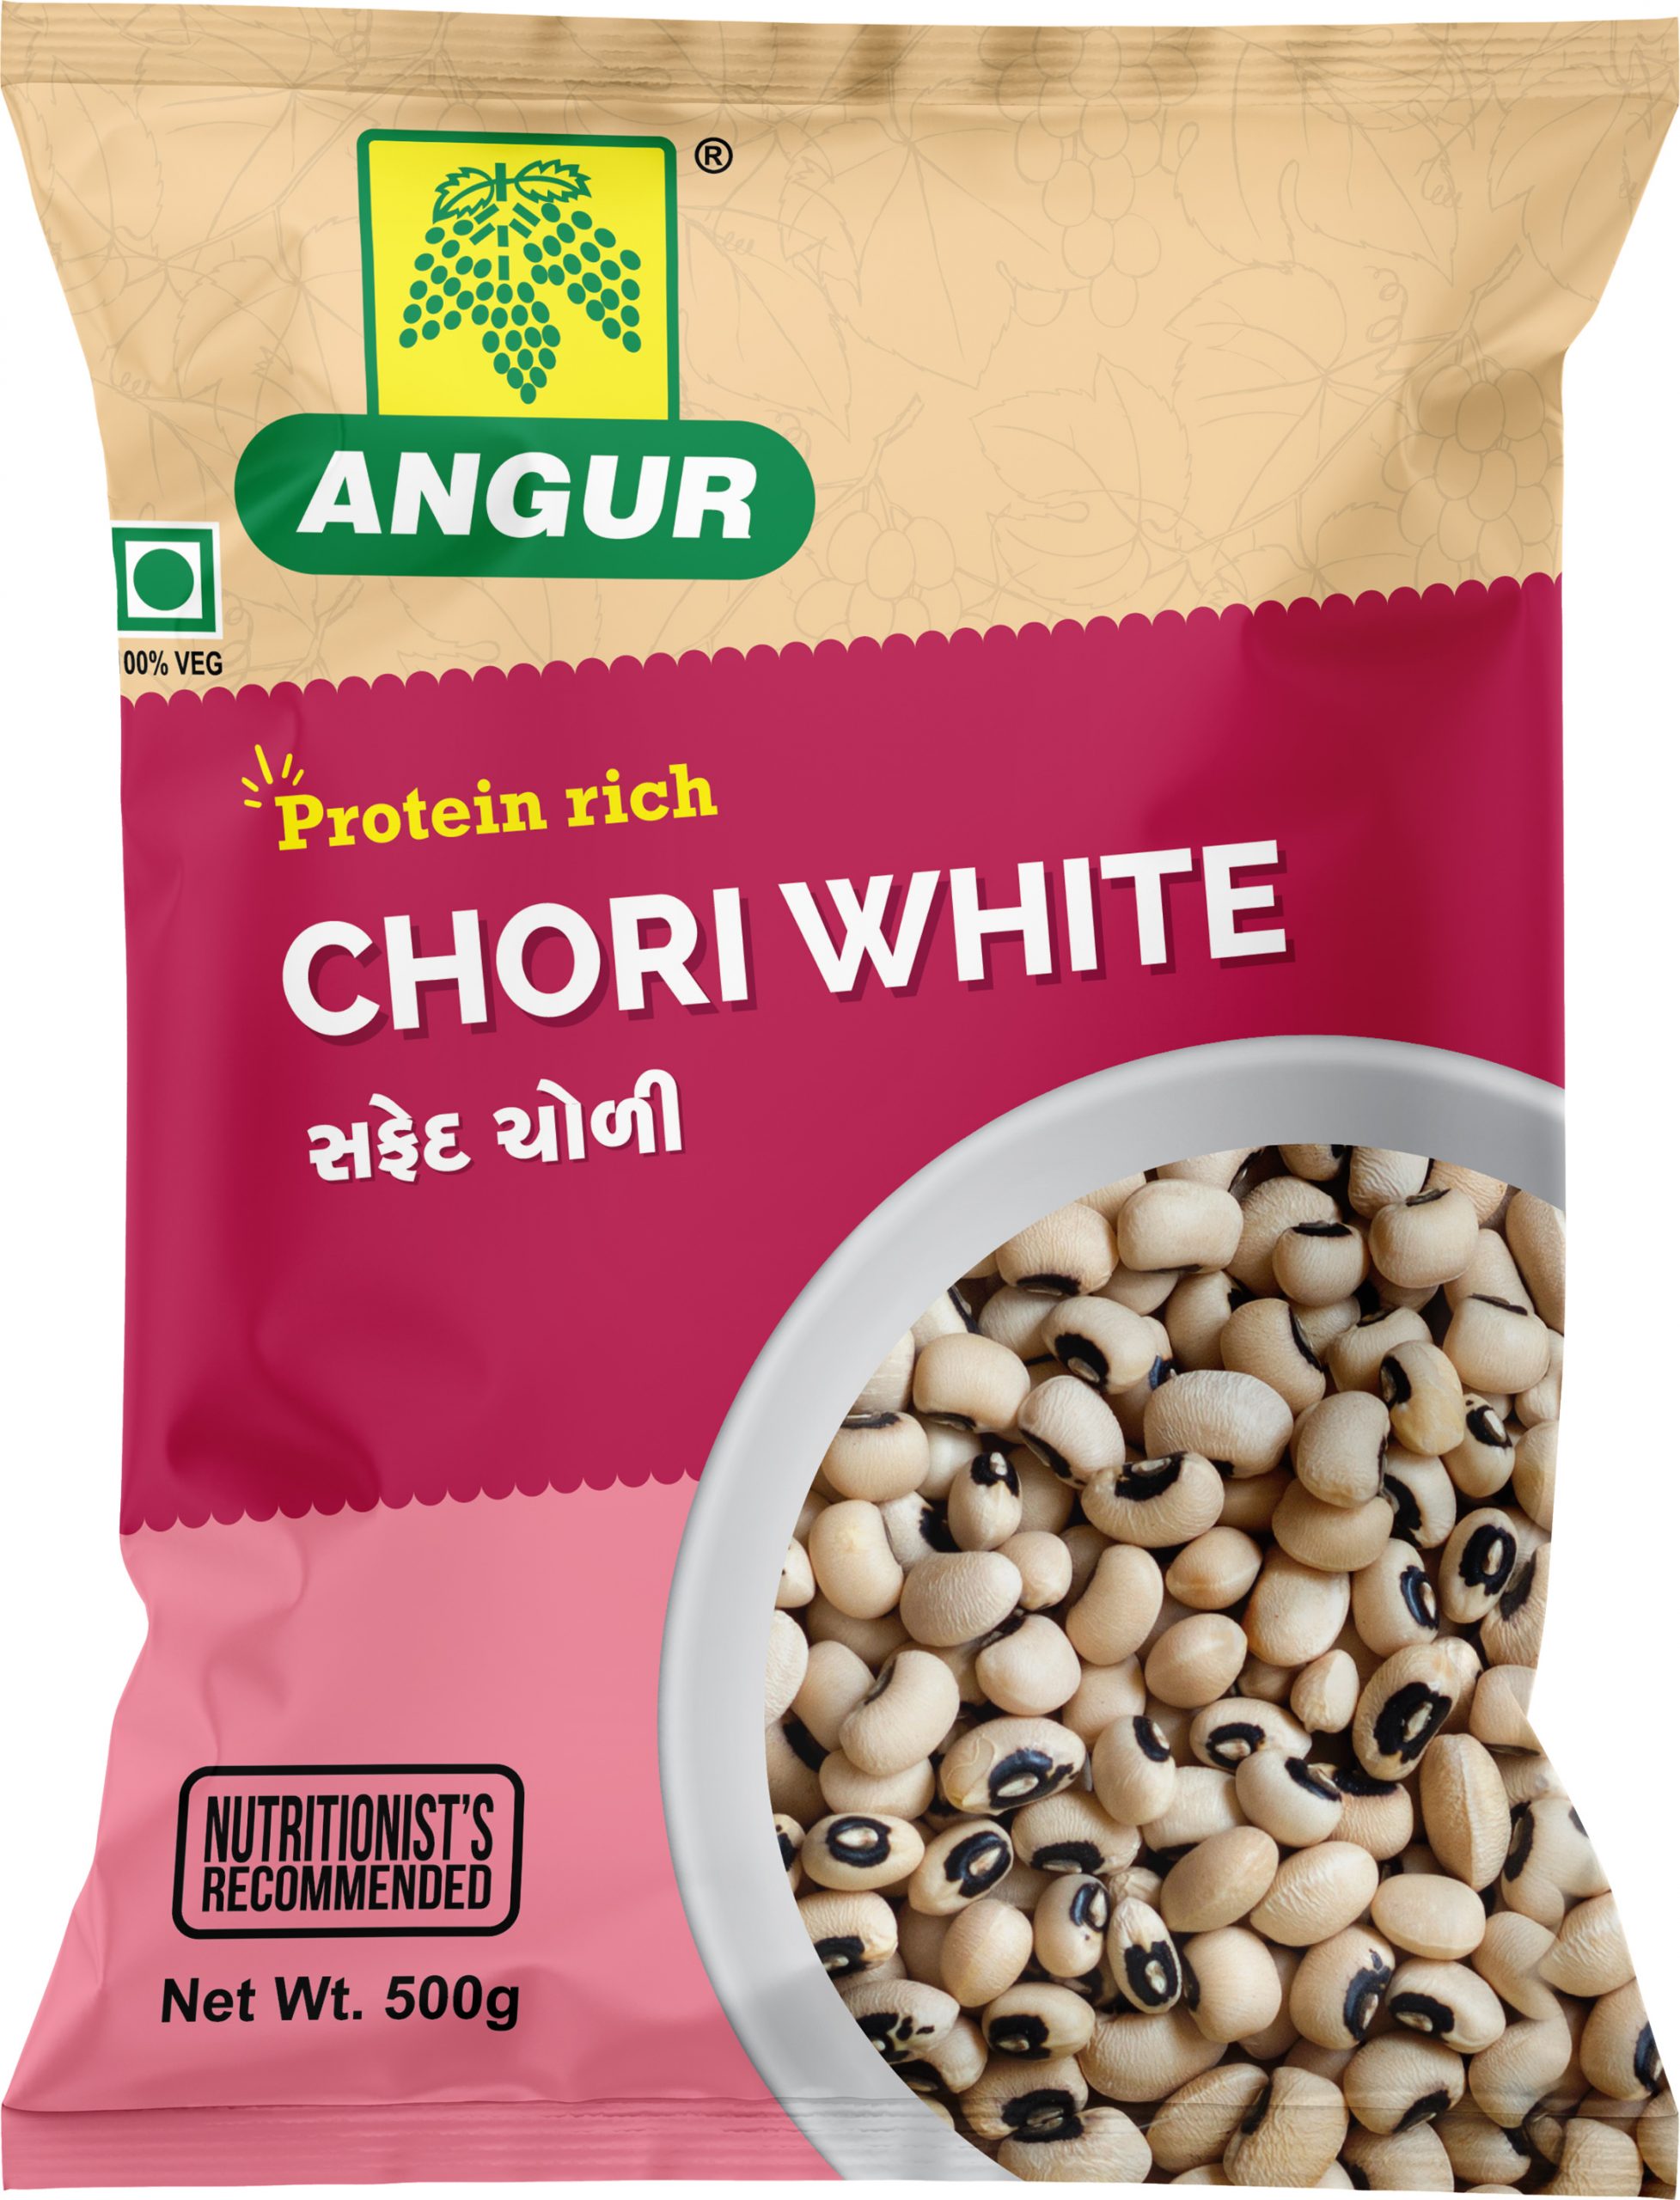 Angur Chori White | Shopping Chori White | Angur Pulses Products